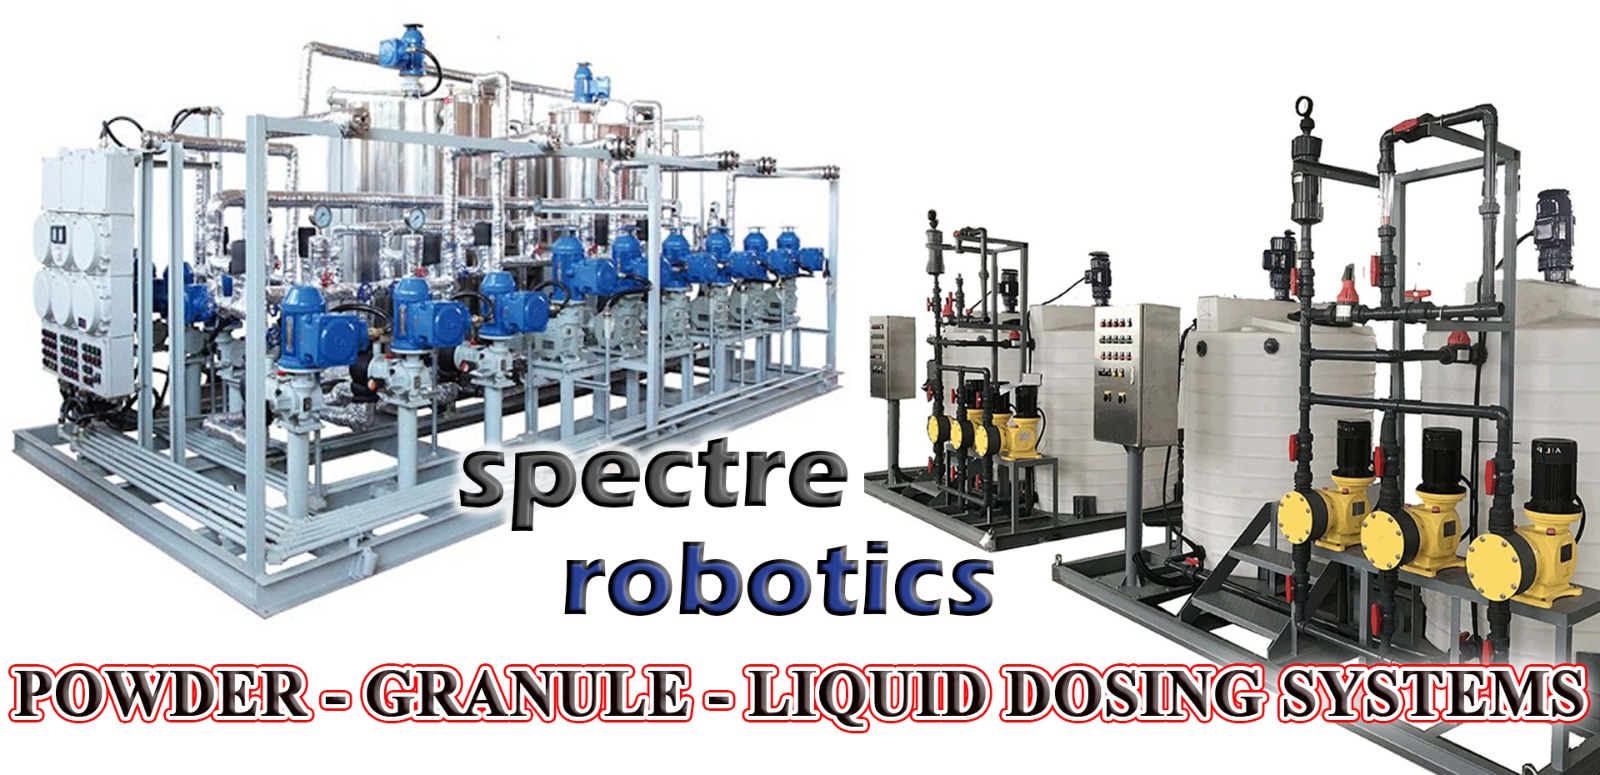 Powder - Granule - Liquid Dosing Systems